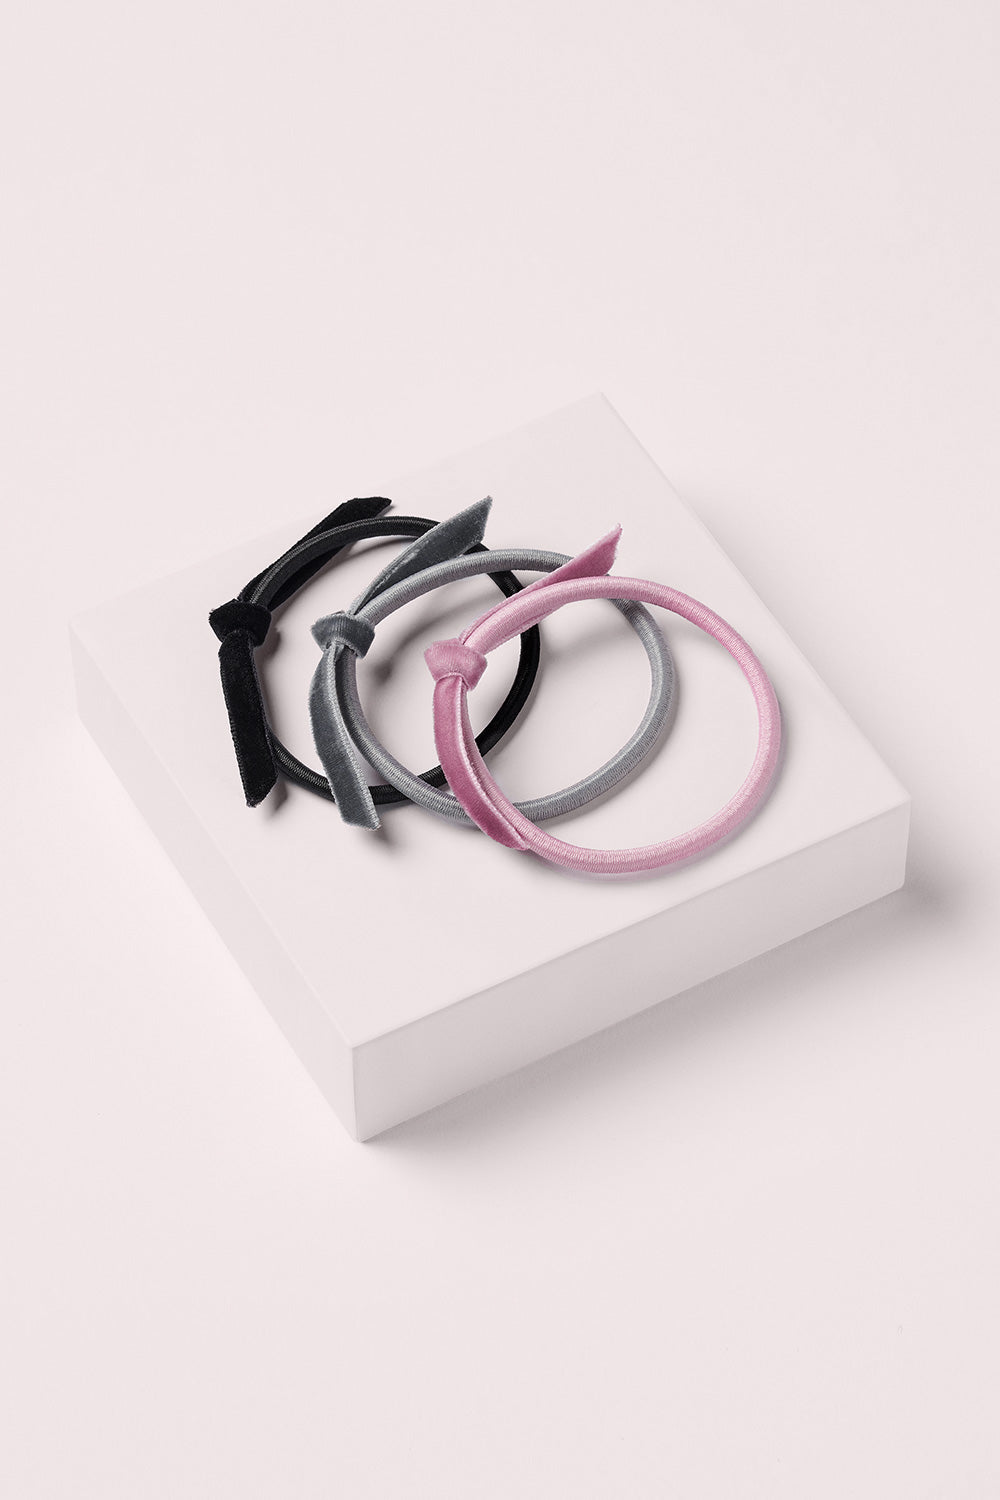 Black elastic velvet ribbon - Lace To Love